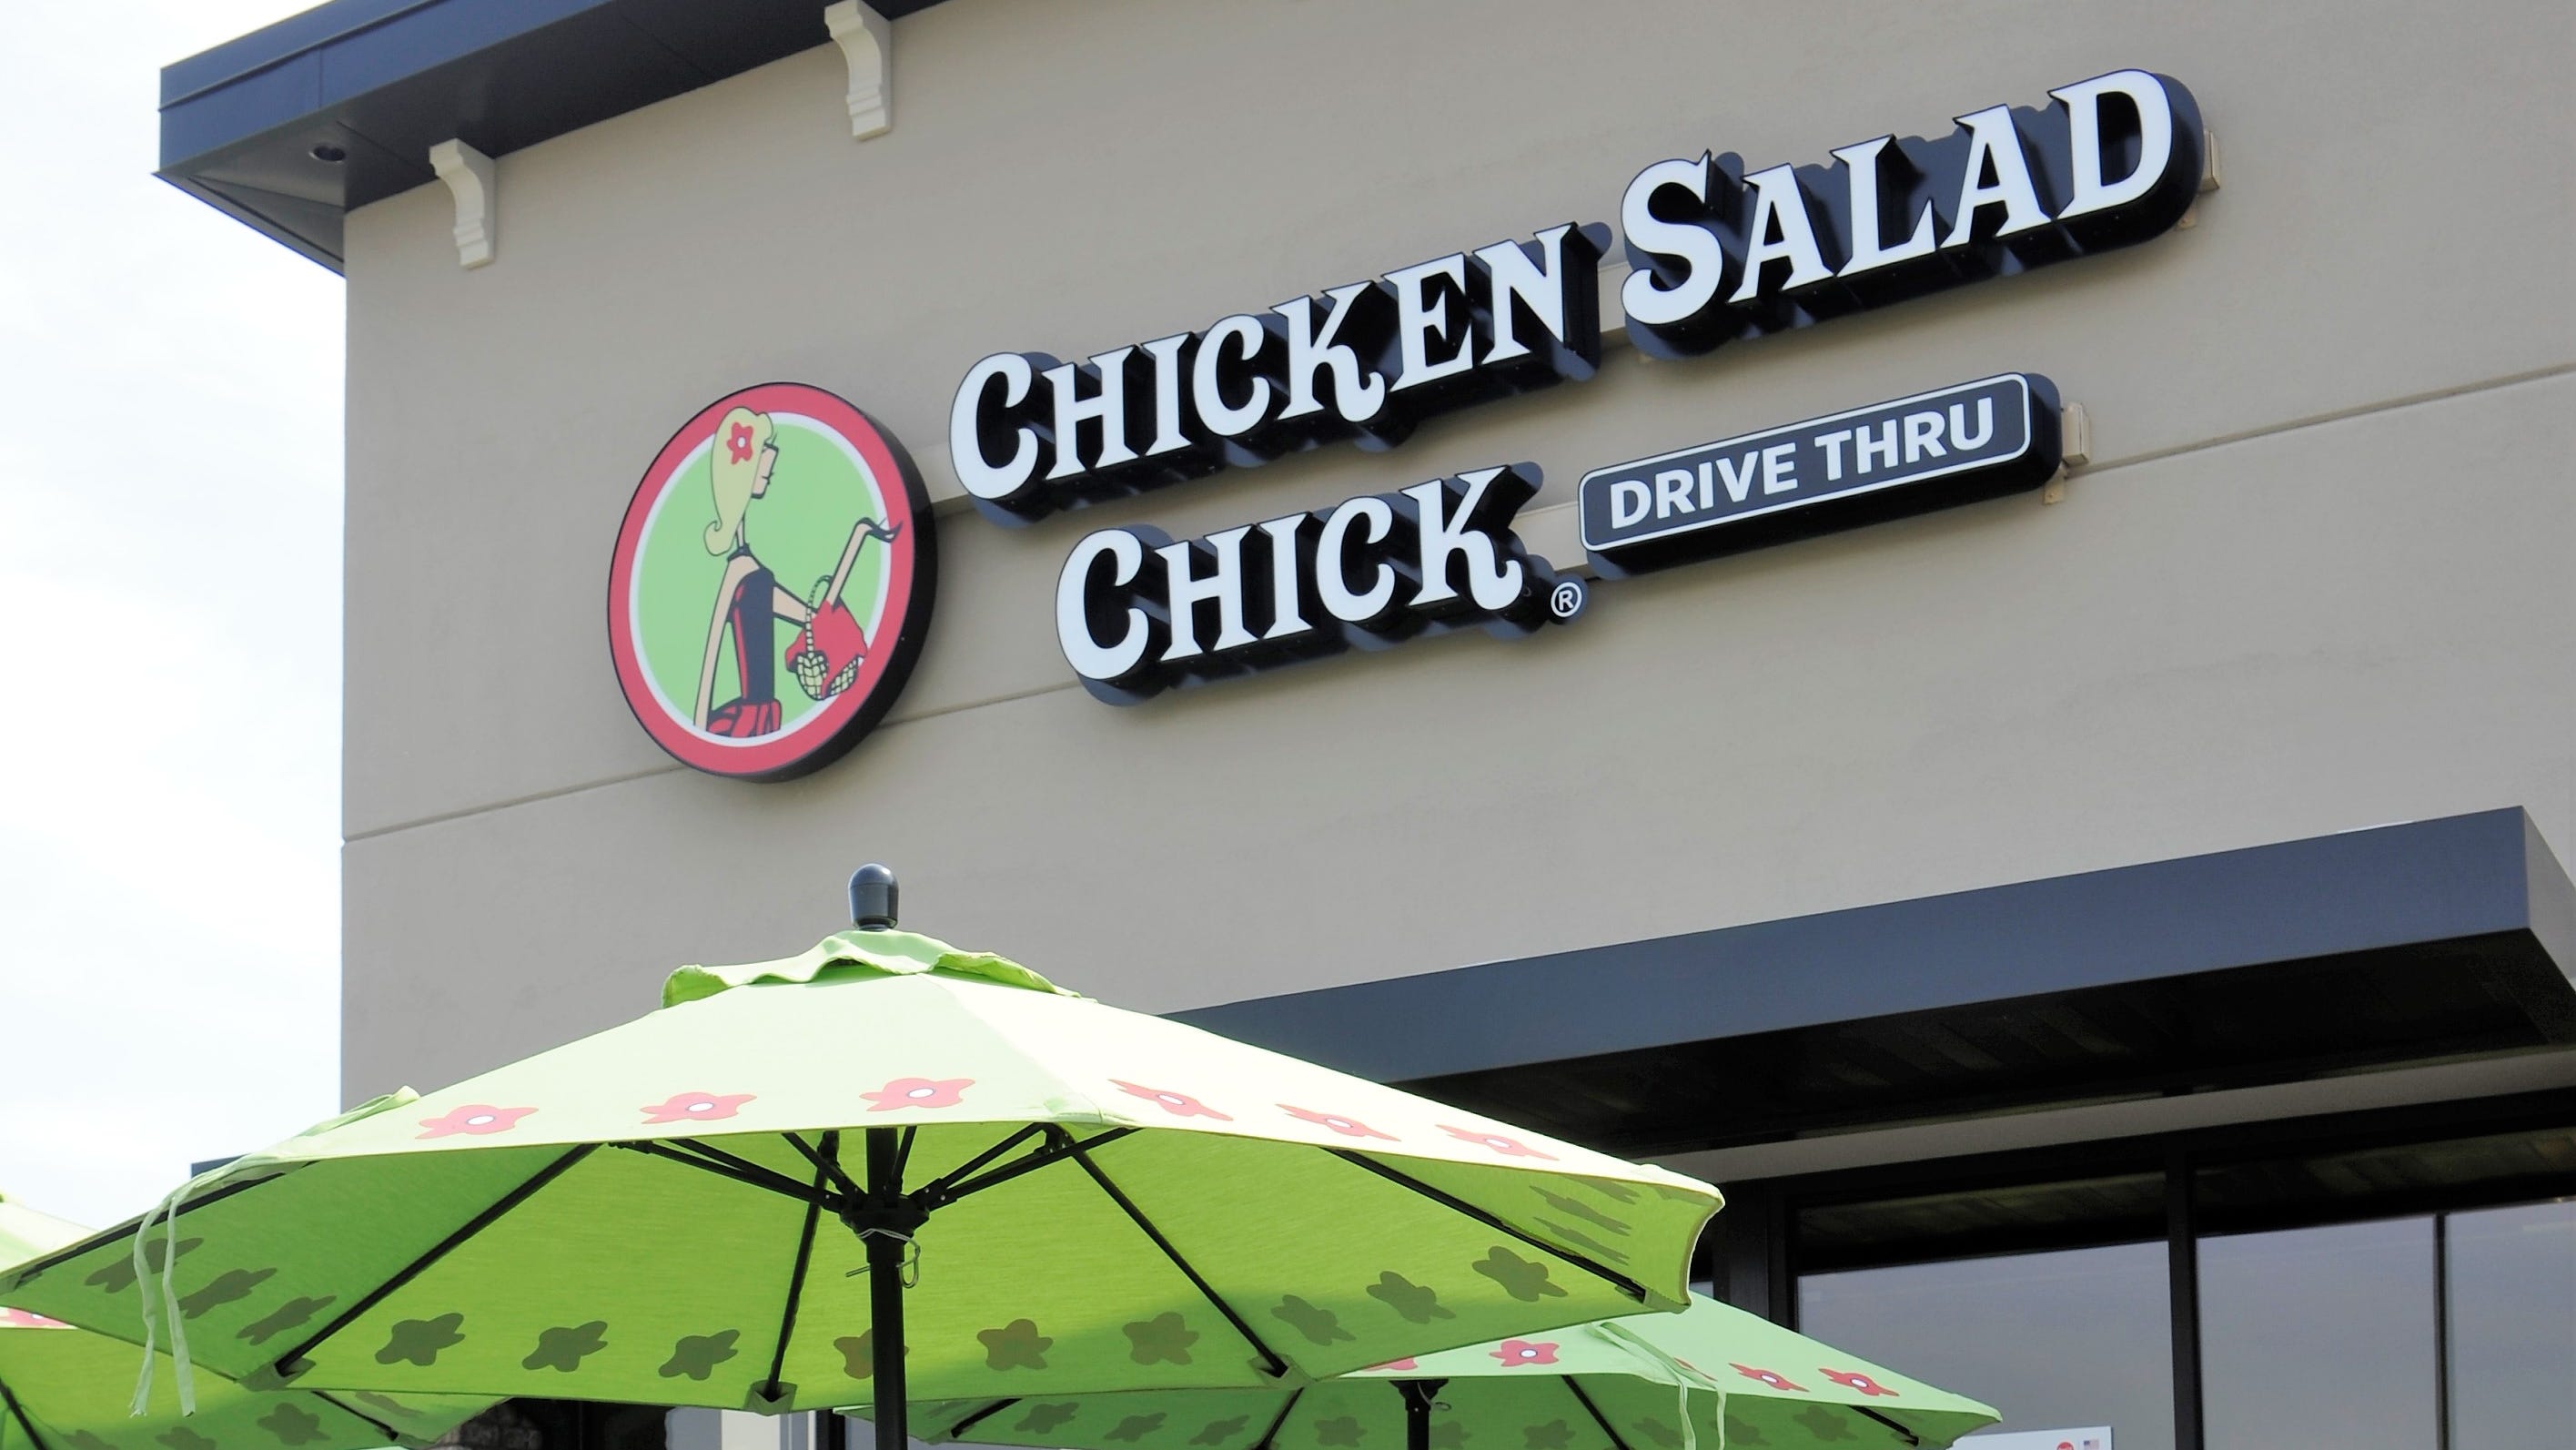 chicken salad chick menu with prices